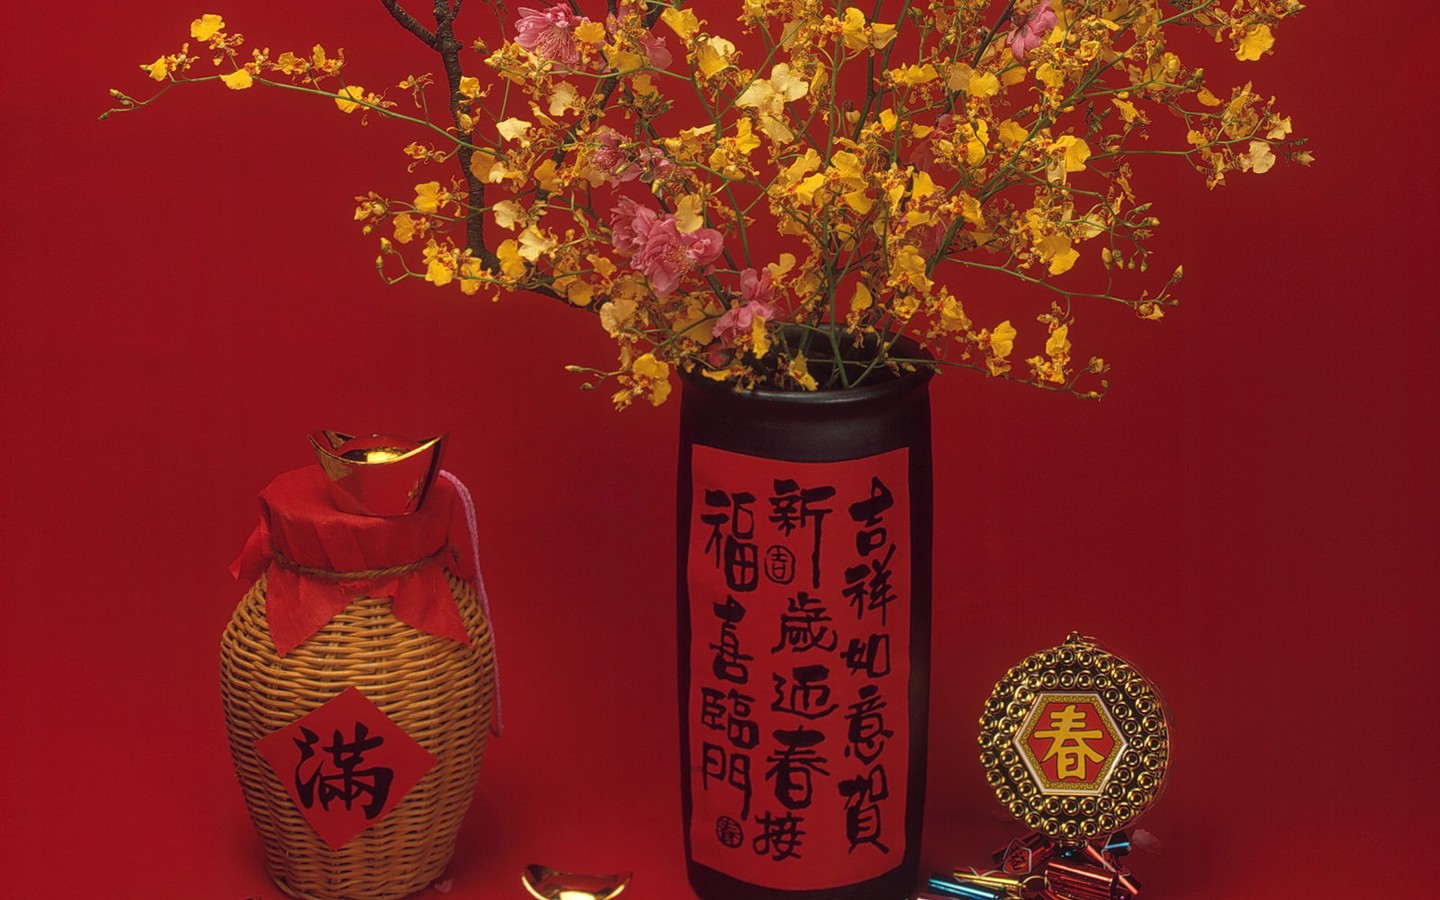 China Wind festive red wallpaper #11 - 1440x900